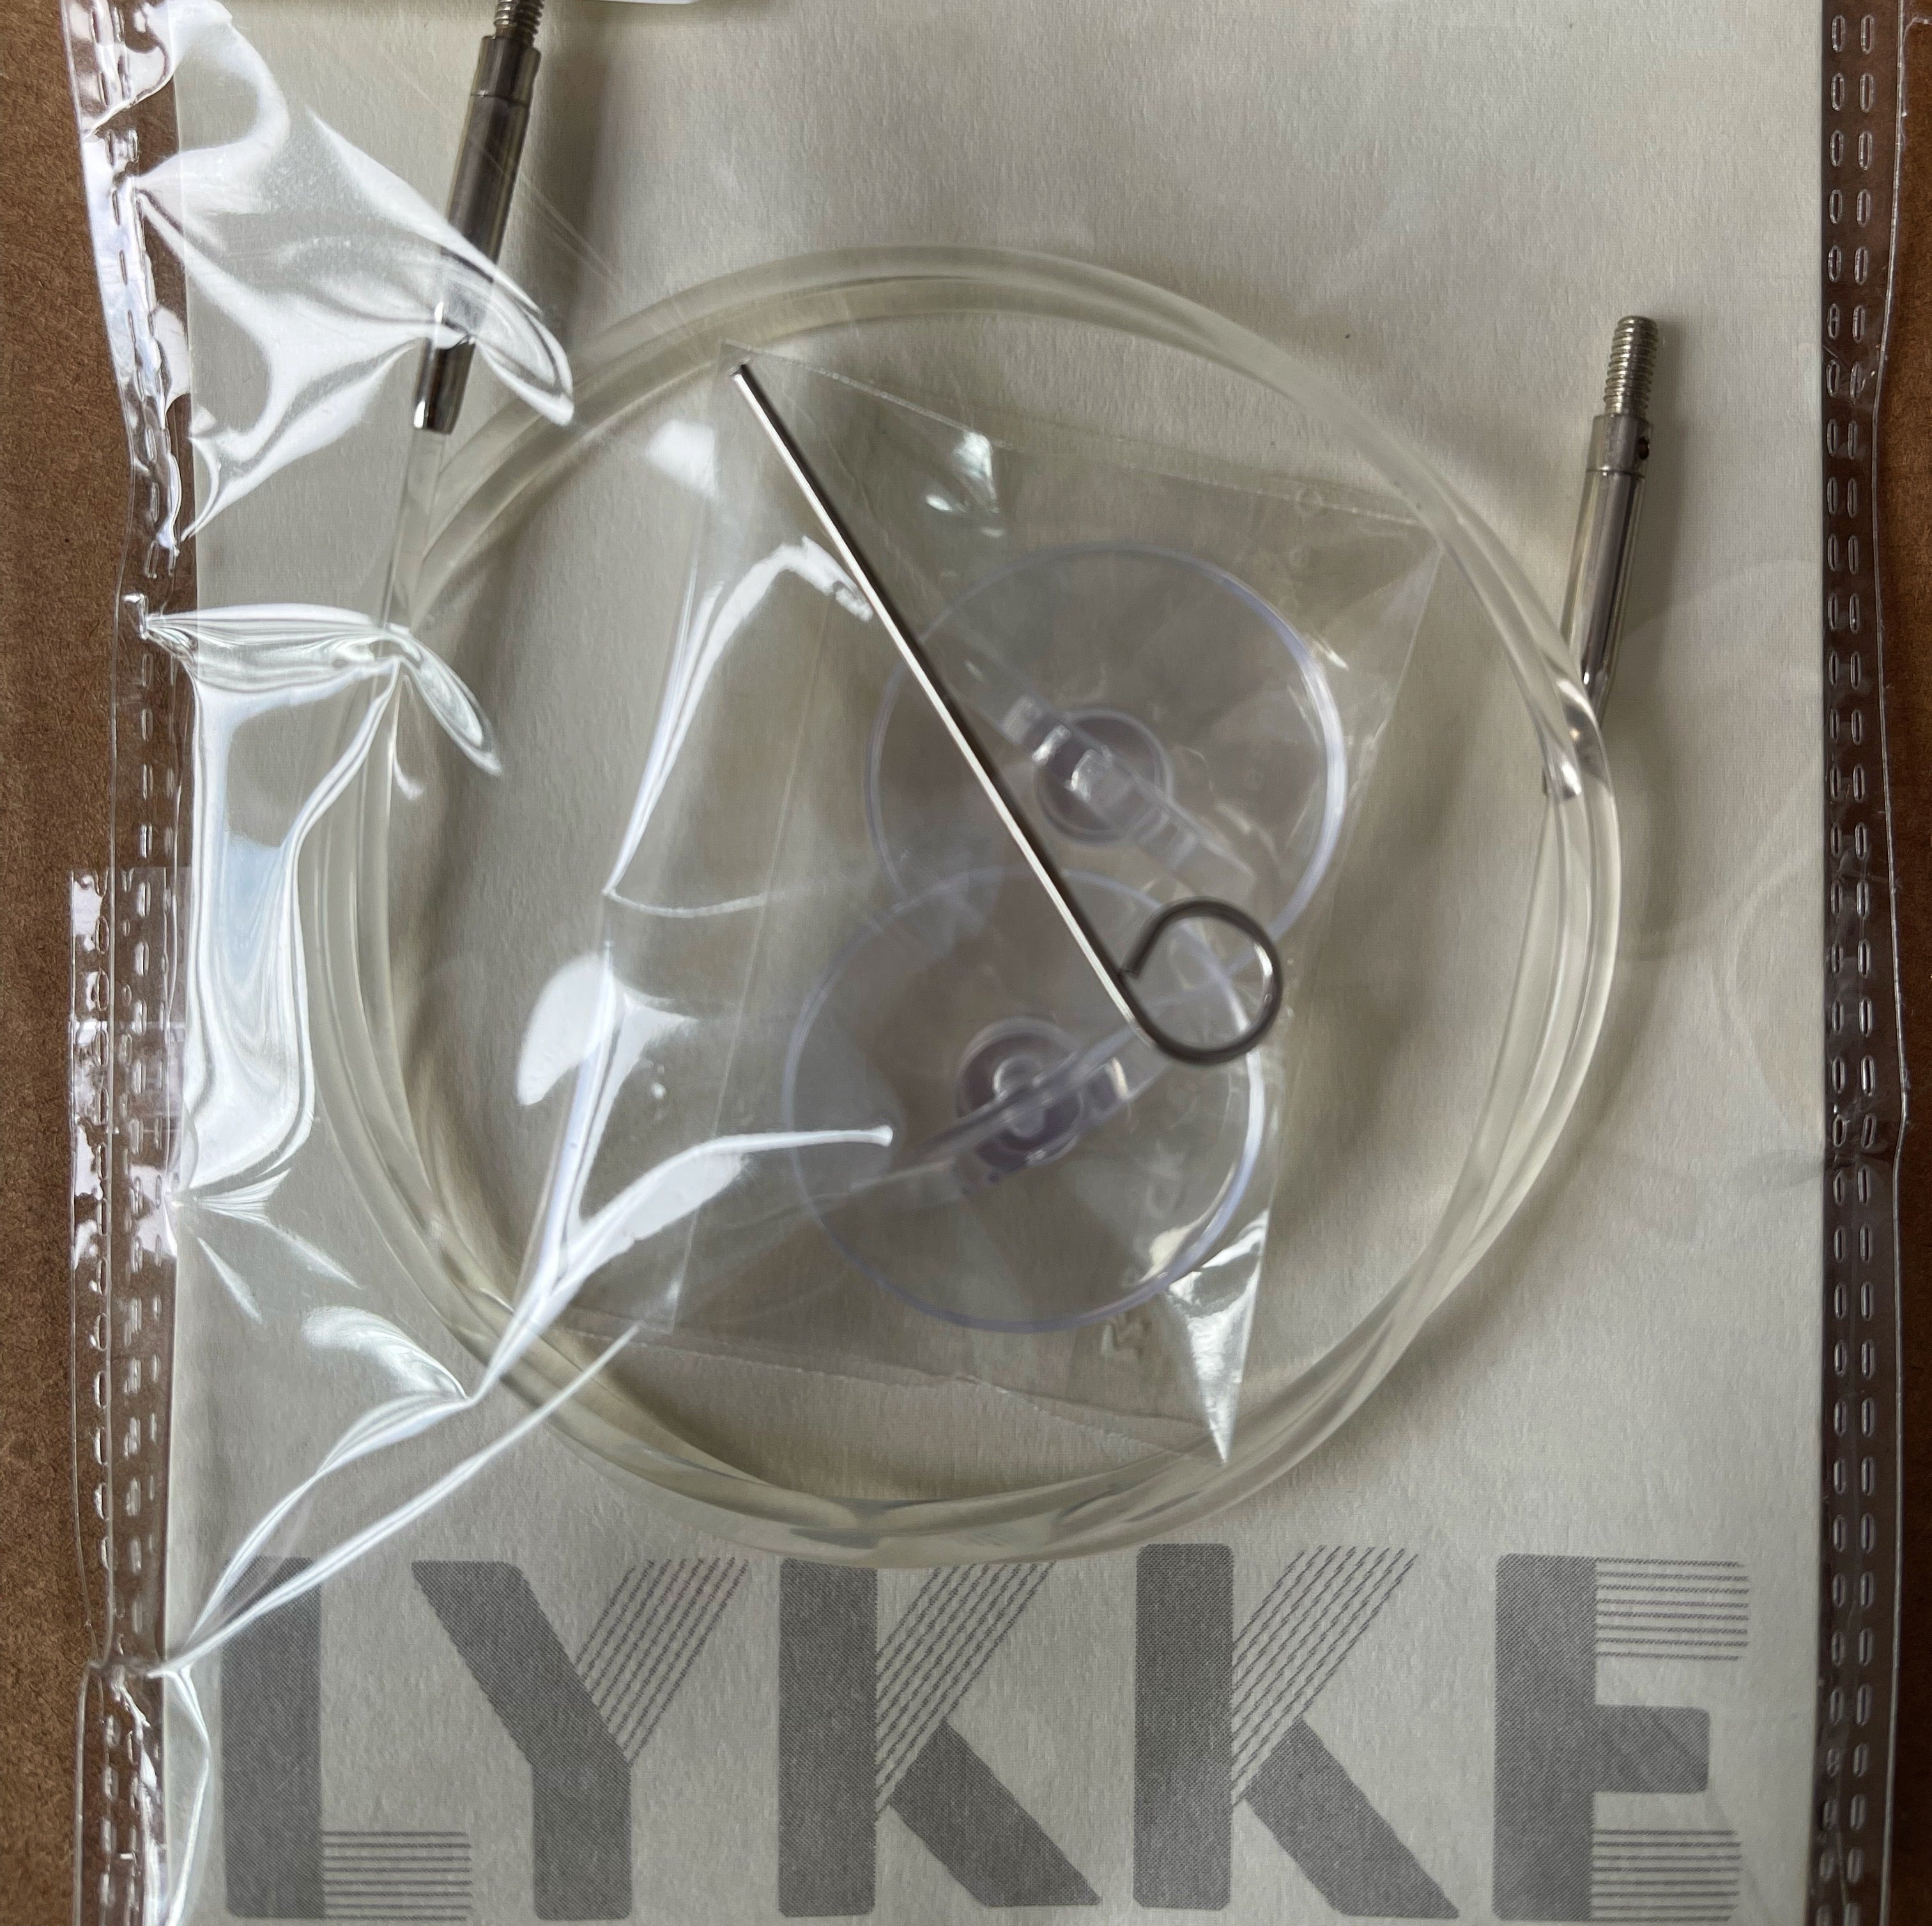 LYKKE  Driftwood Interchangeable Tips 5 – Firefly Fibers